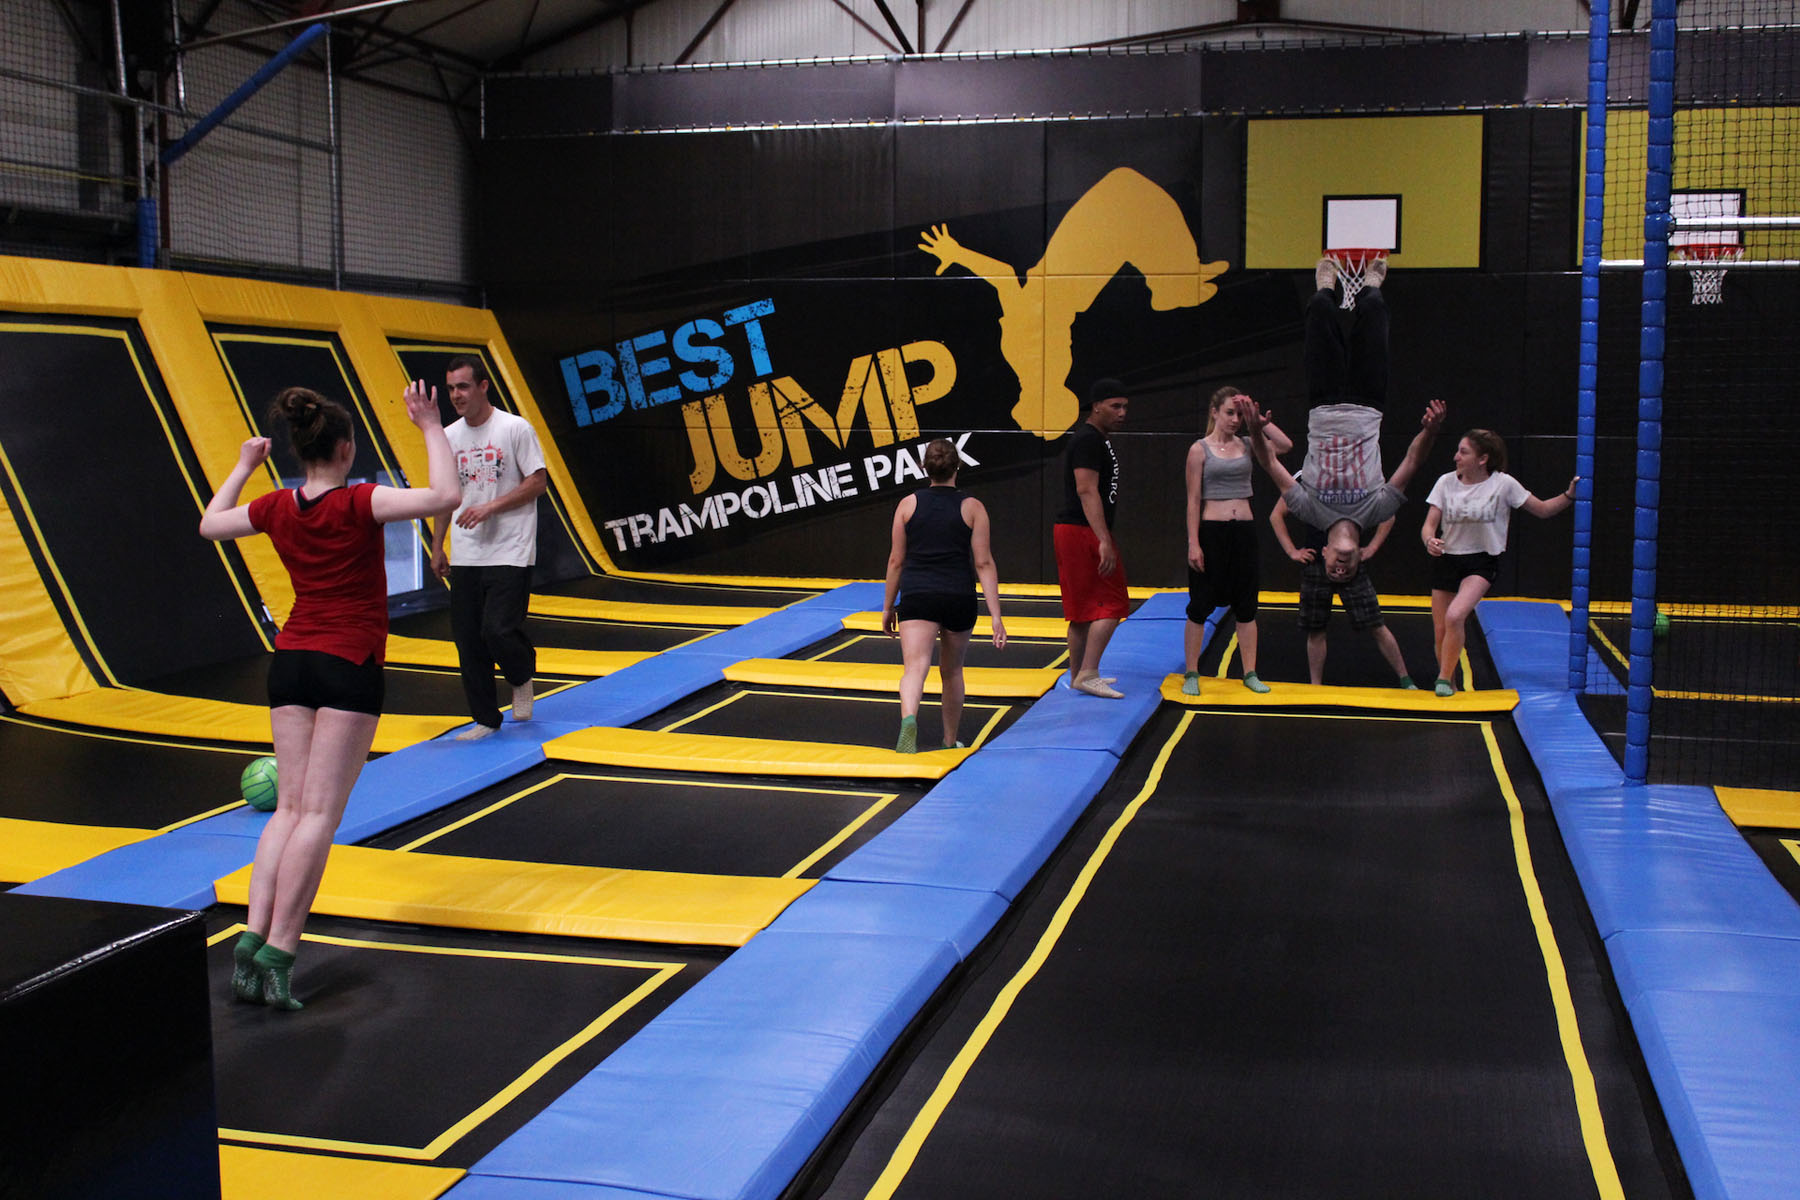 Best jump trampoline park 1.jpg